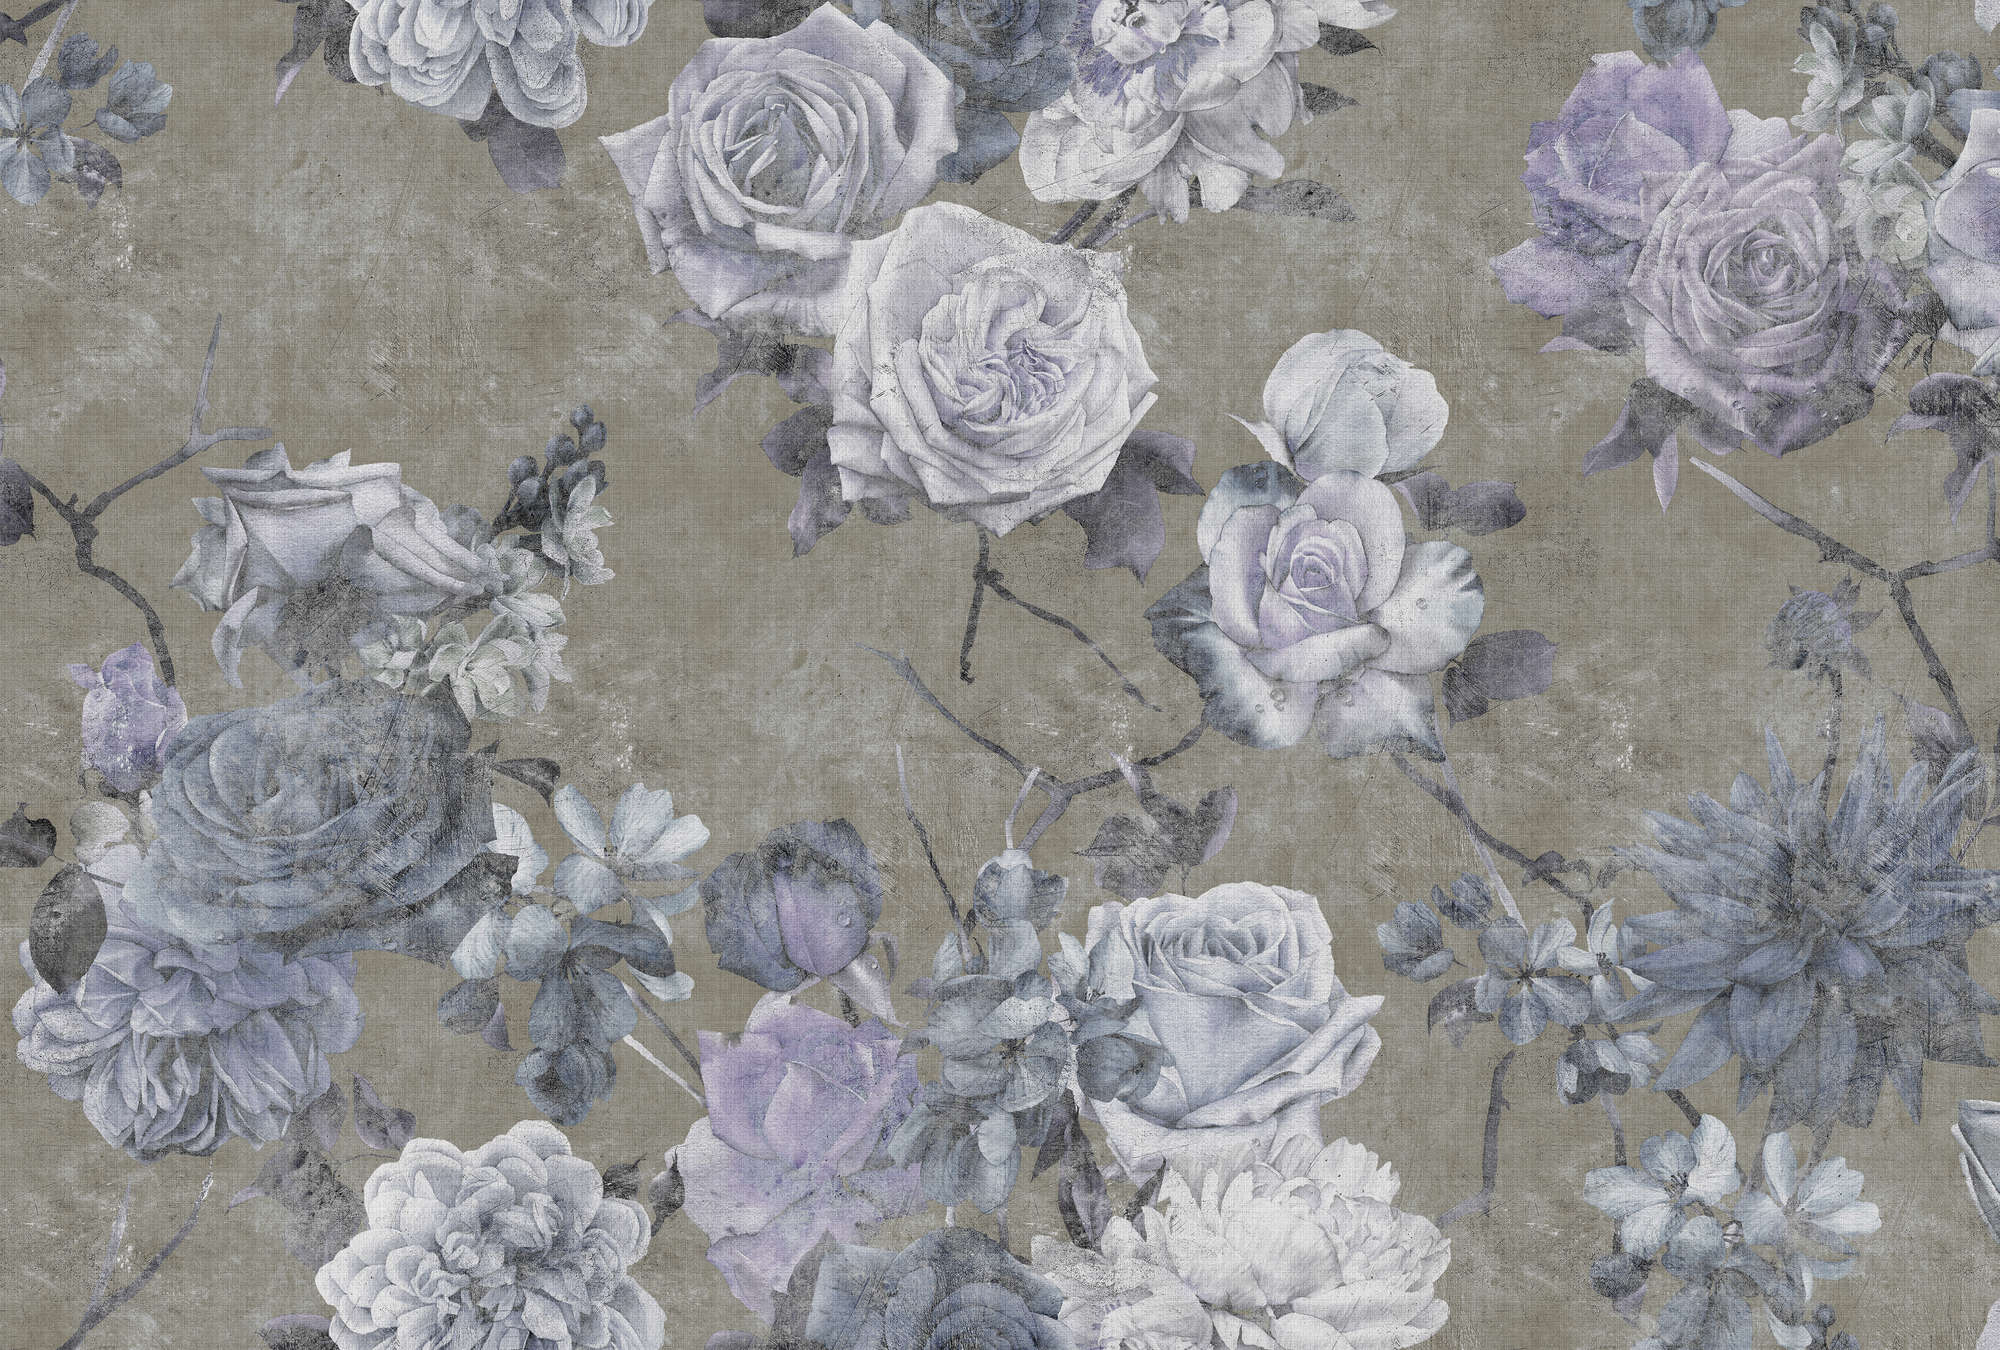             Sleeping Beauty 1 - Carta da parati in lino naturale con struttura a fiori di rosa in look used - Blu, Taupe | Premium smooth fleece
        